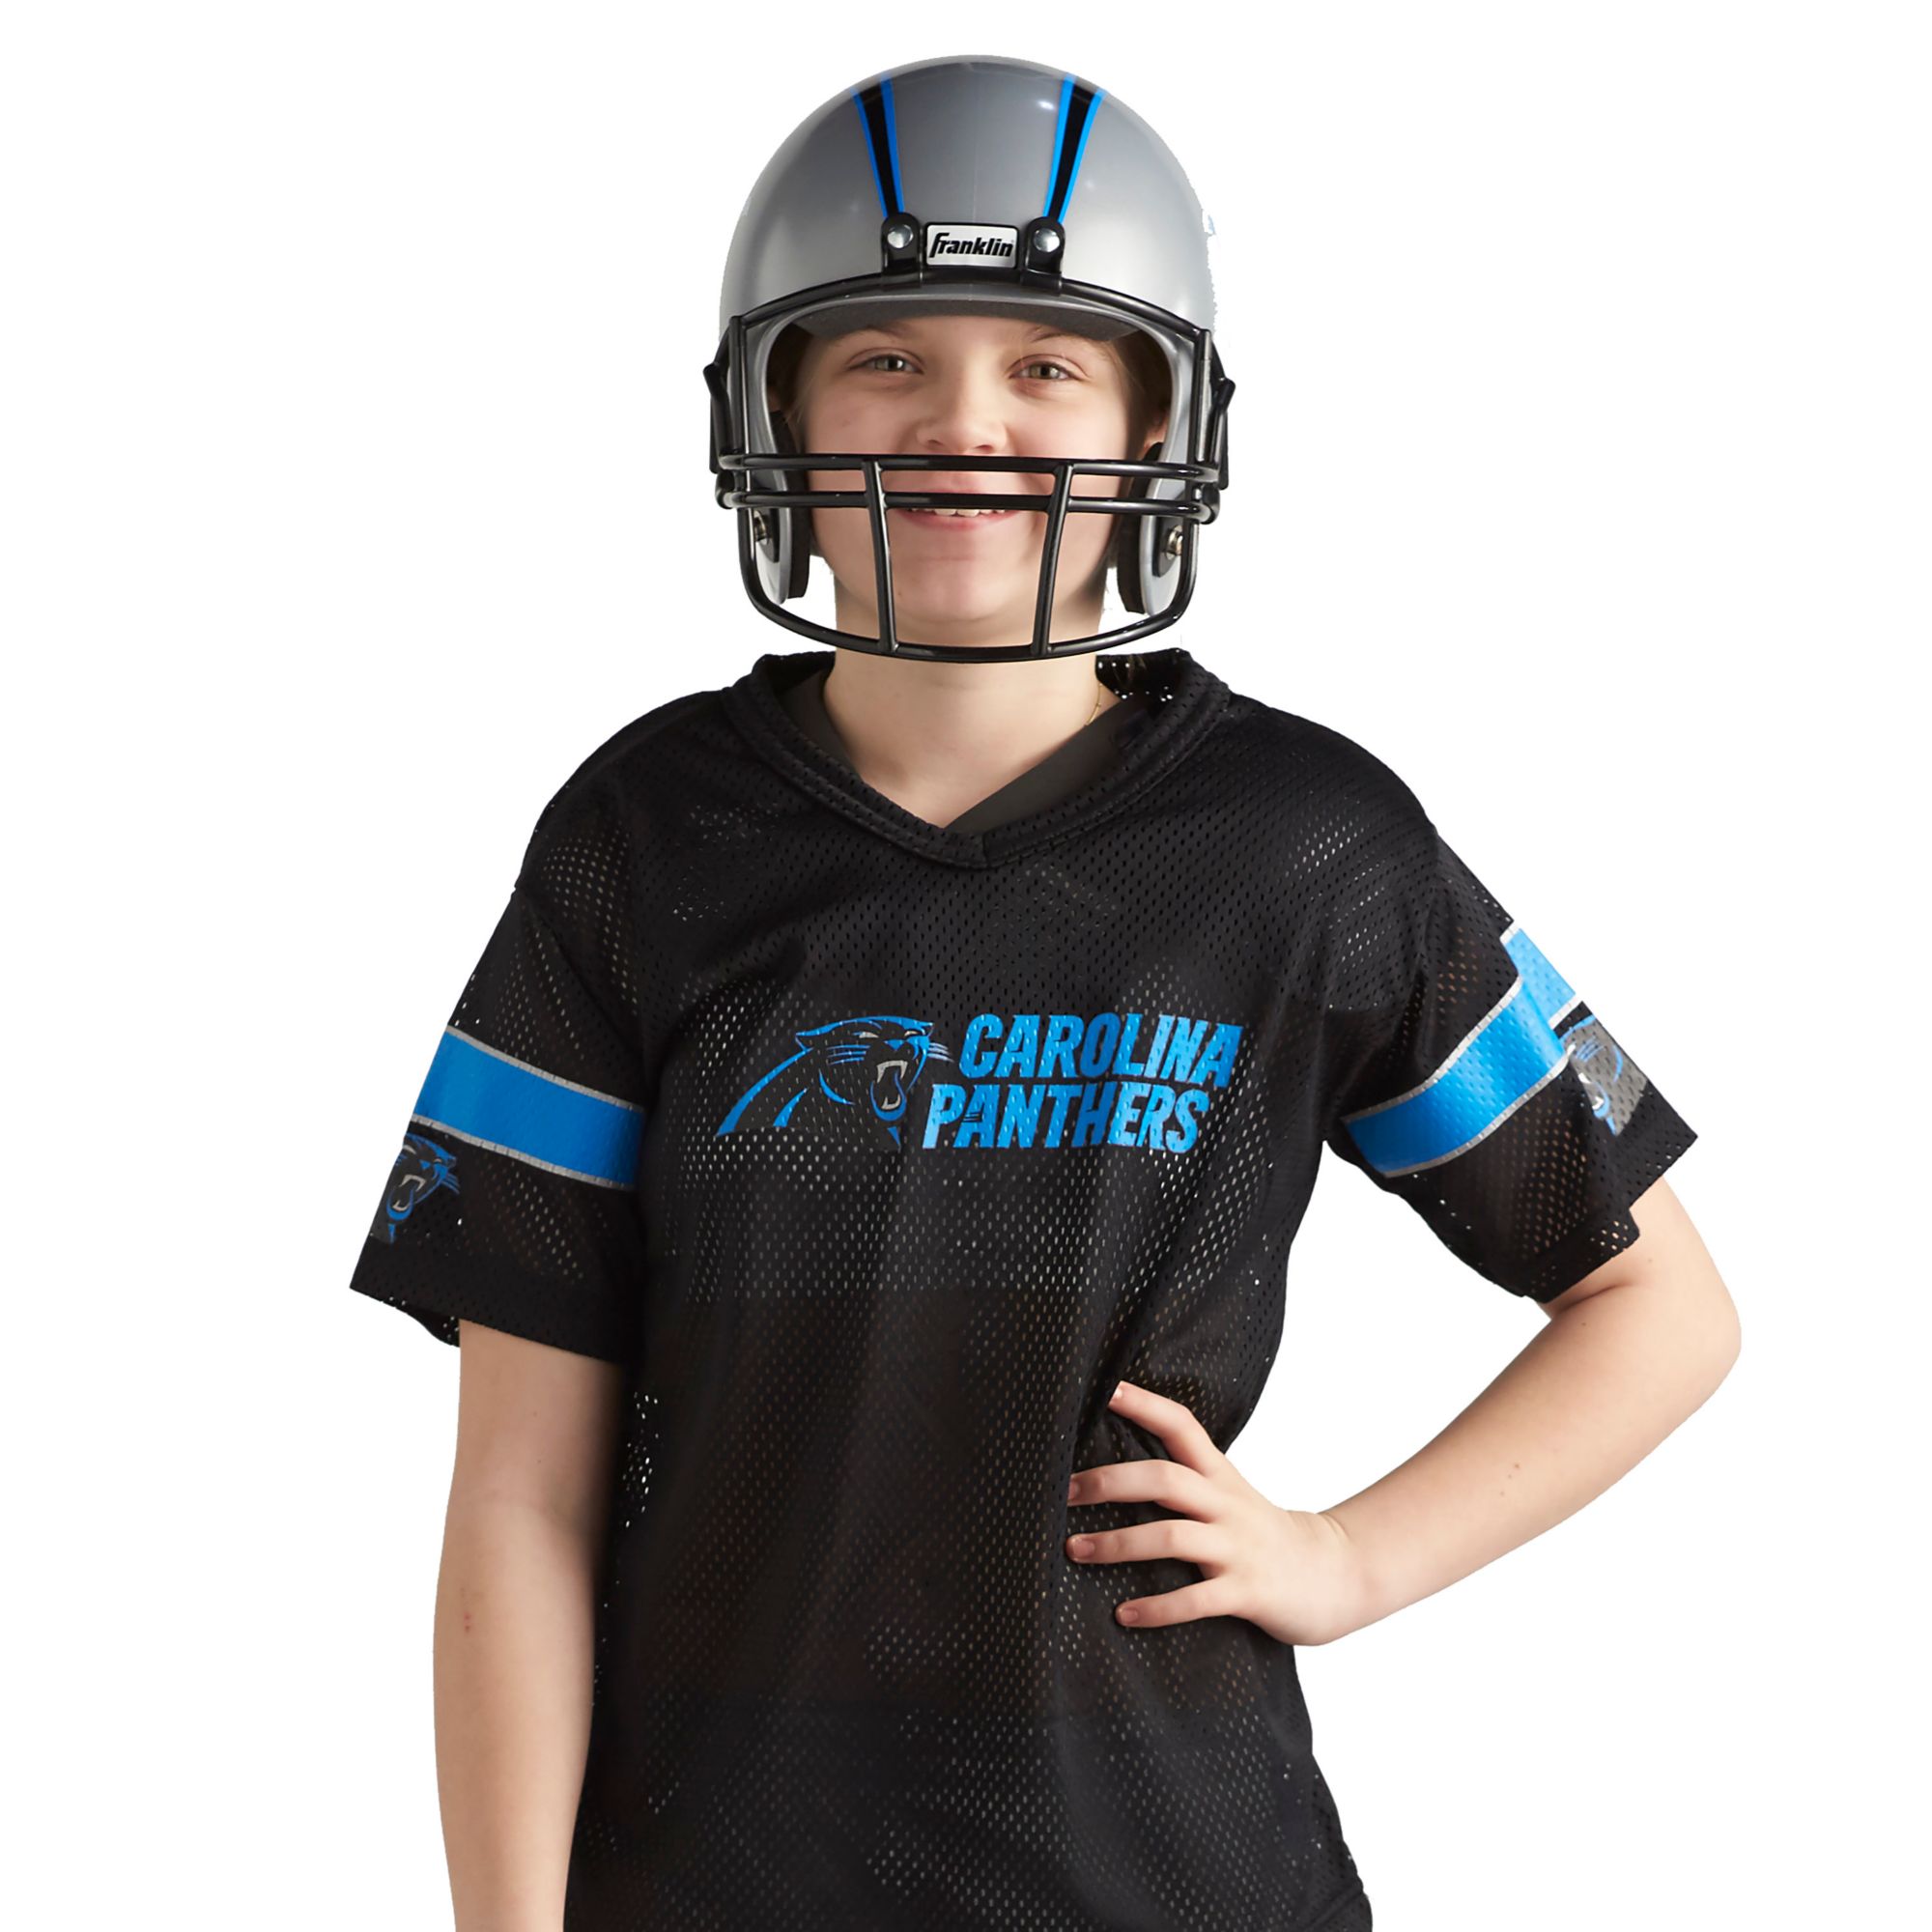 carolina panthers football jersey